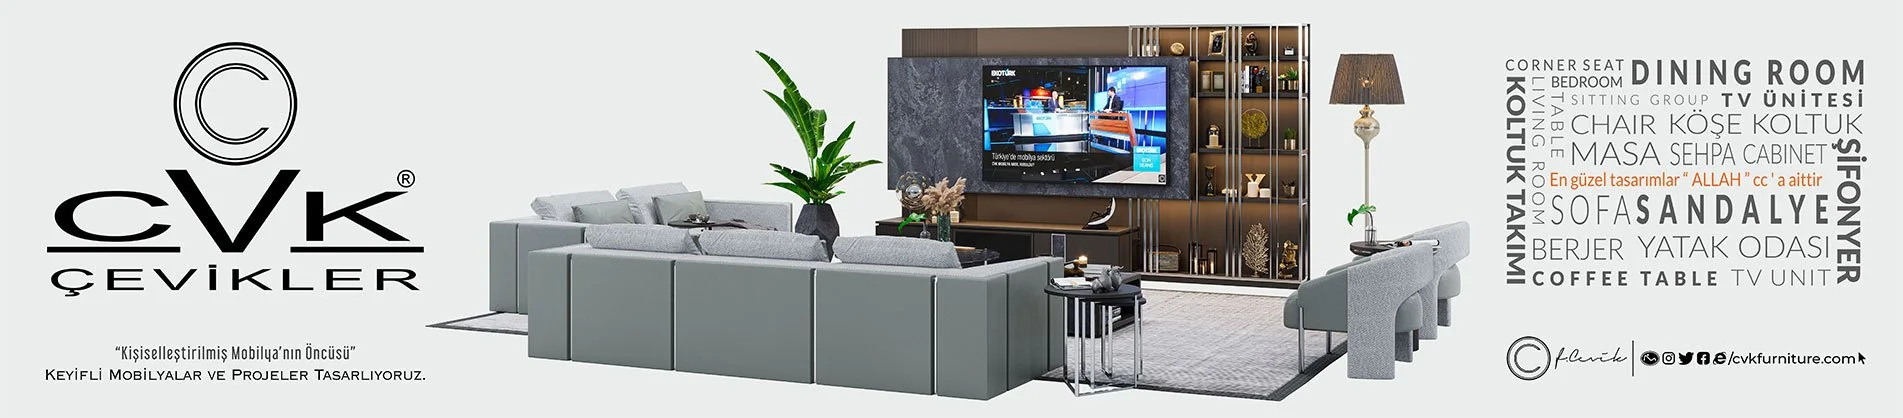 Cvk Furniture TV üniteleri